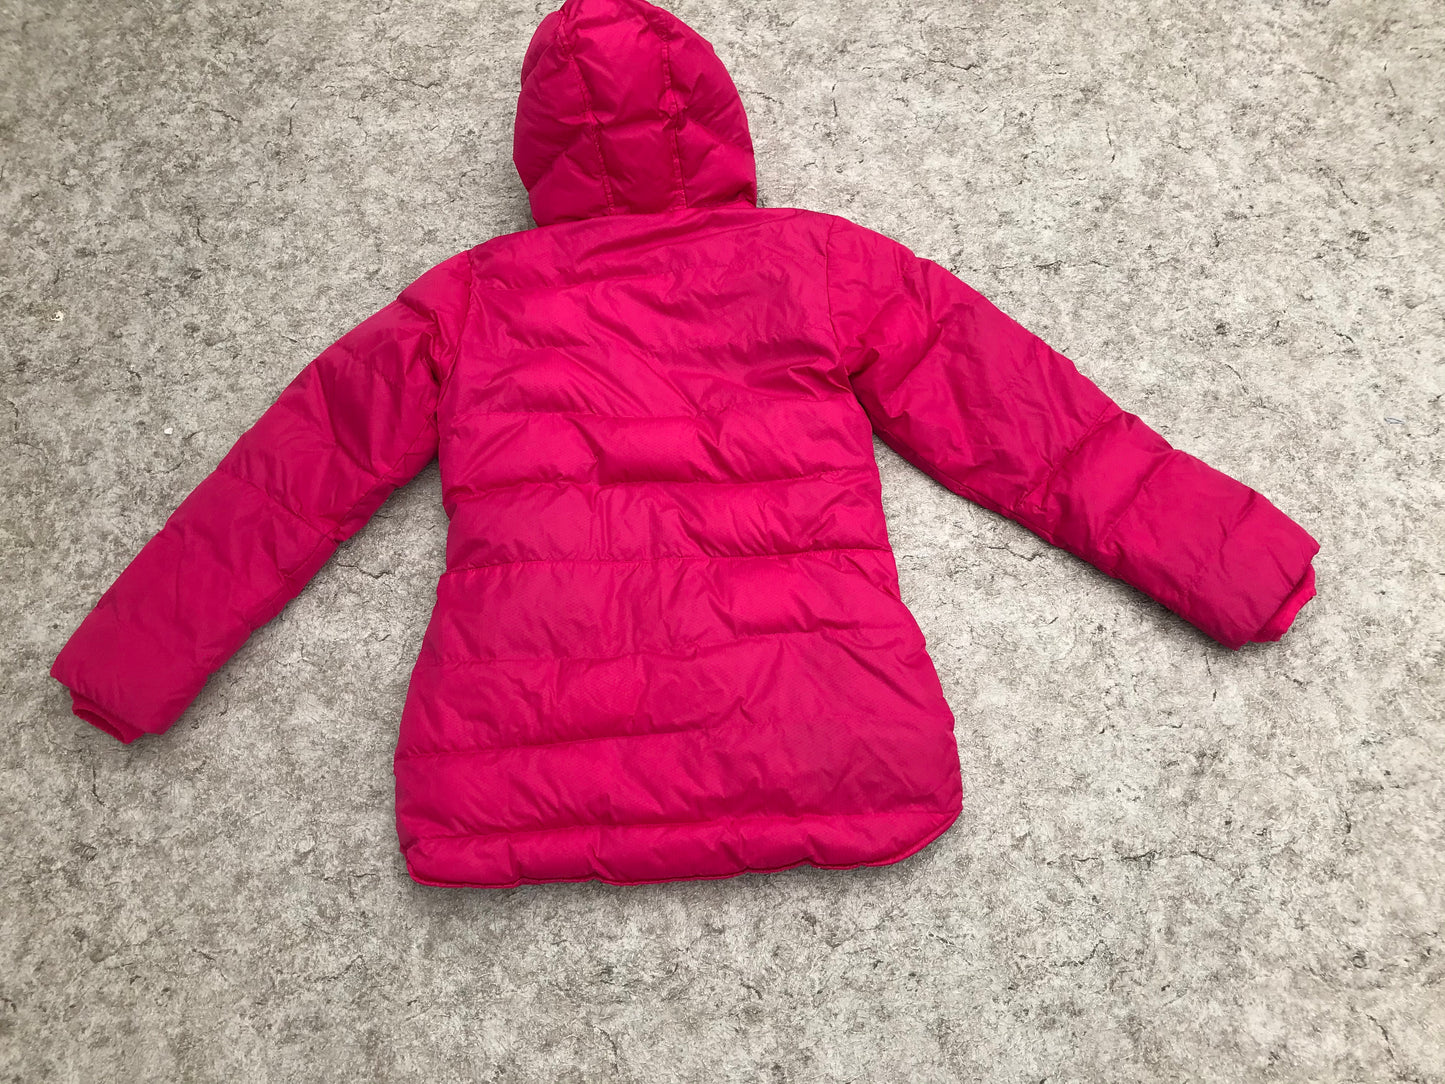 Winter Coat Child Size 10-12 Lands End Brilliant Raspberry and Blue Excellent